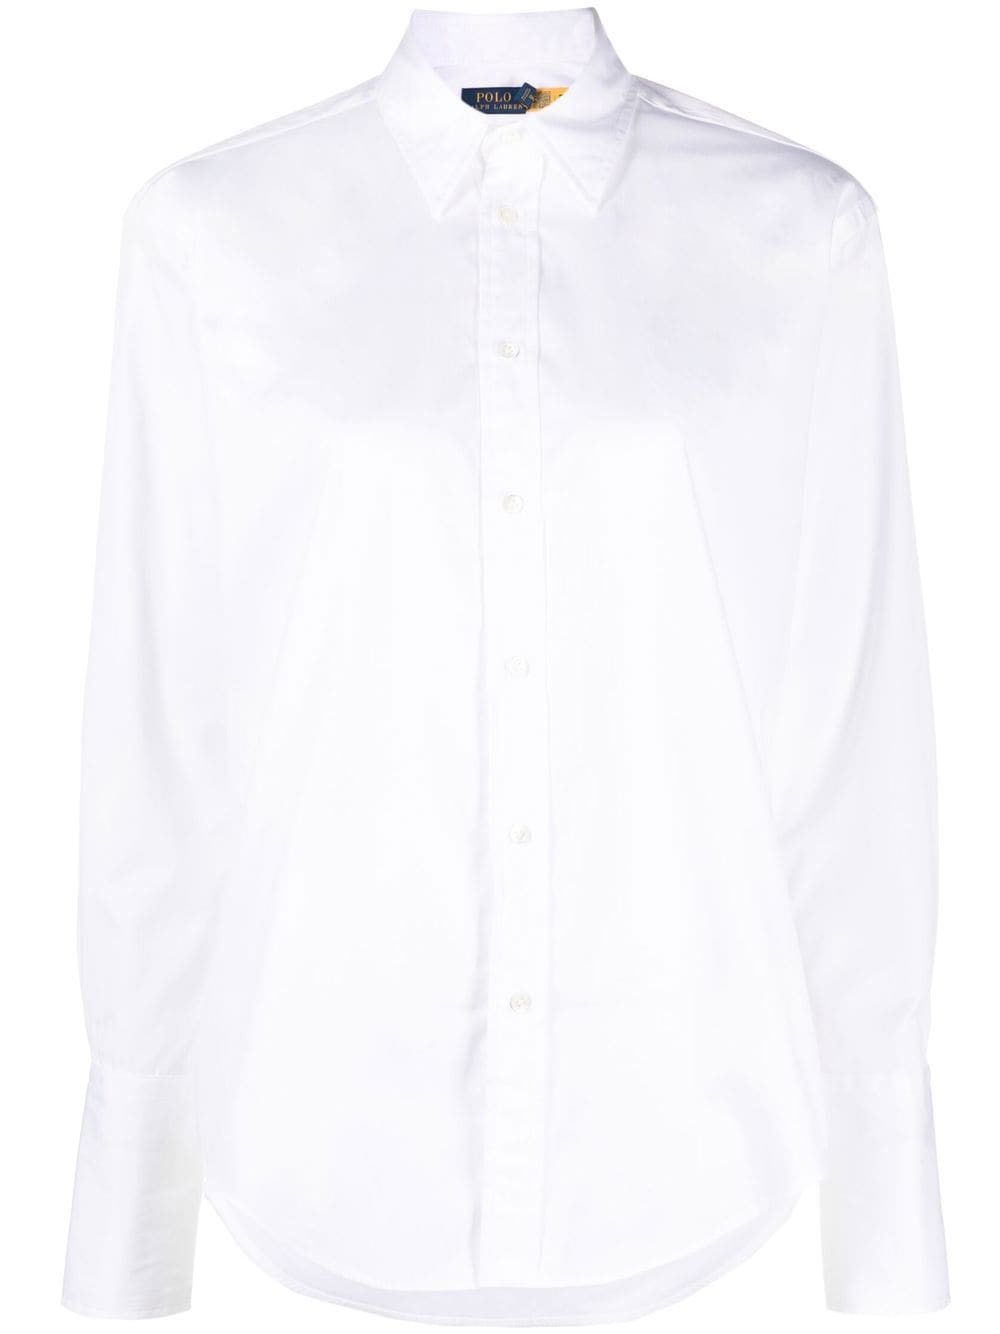 Polo Ralph Lauren cotton button-up shirt - White